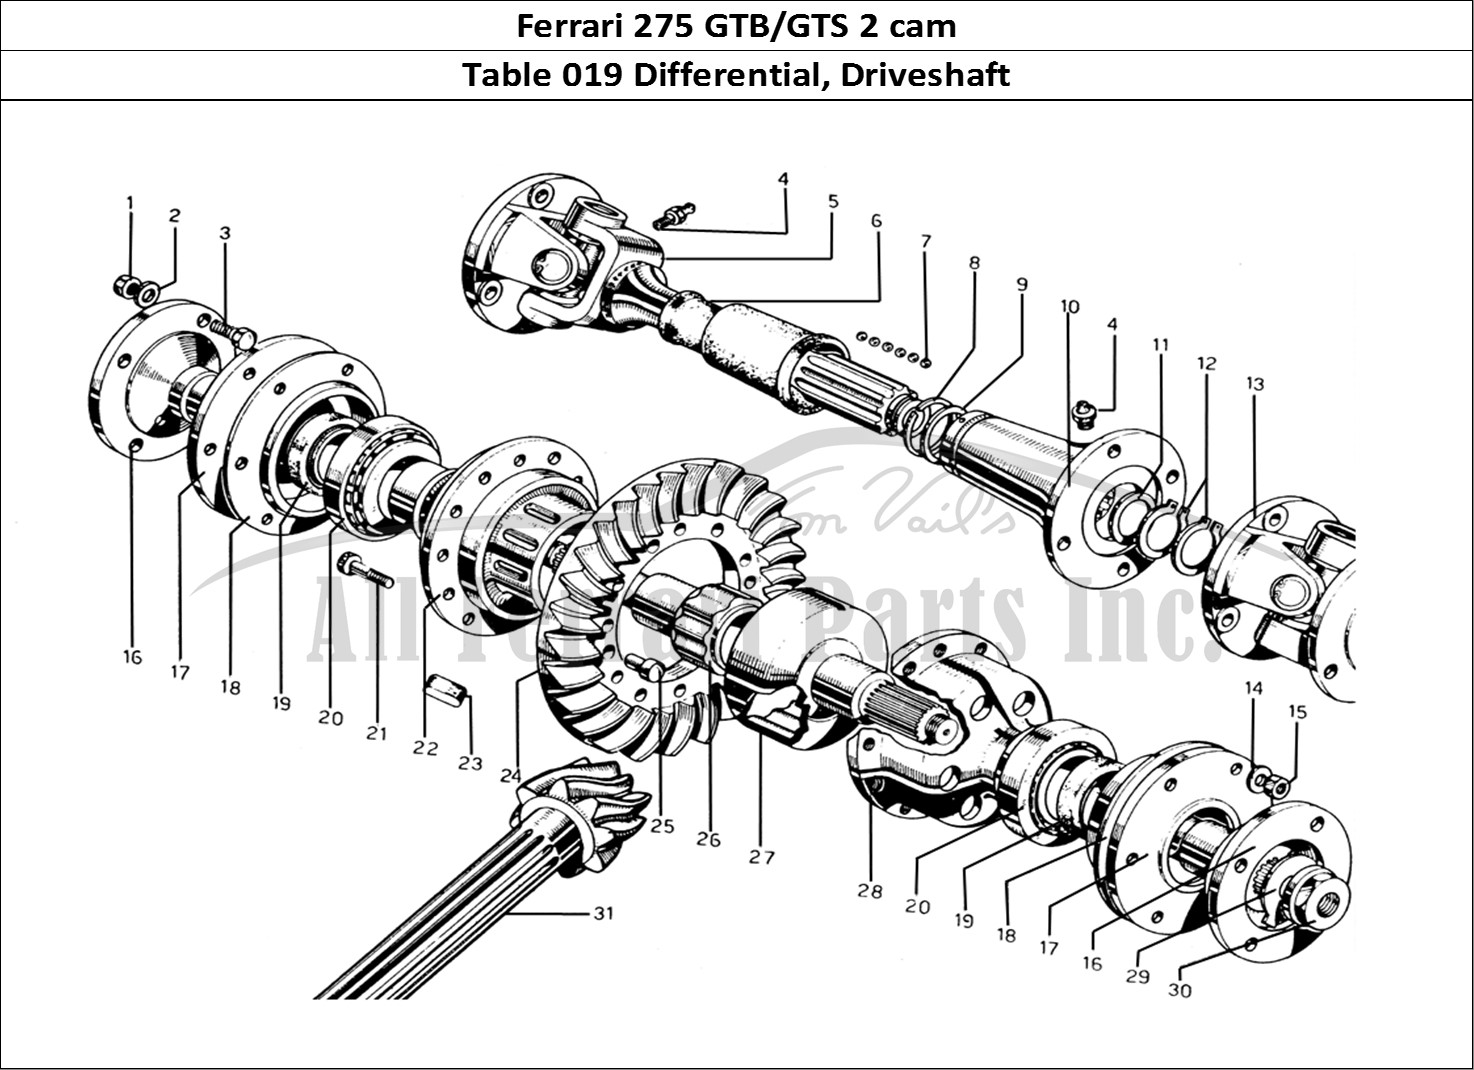 Ferrari Parts Ferrari 275 GTB/GTS 2 cam Page 019 Differential & Driveshaft